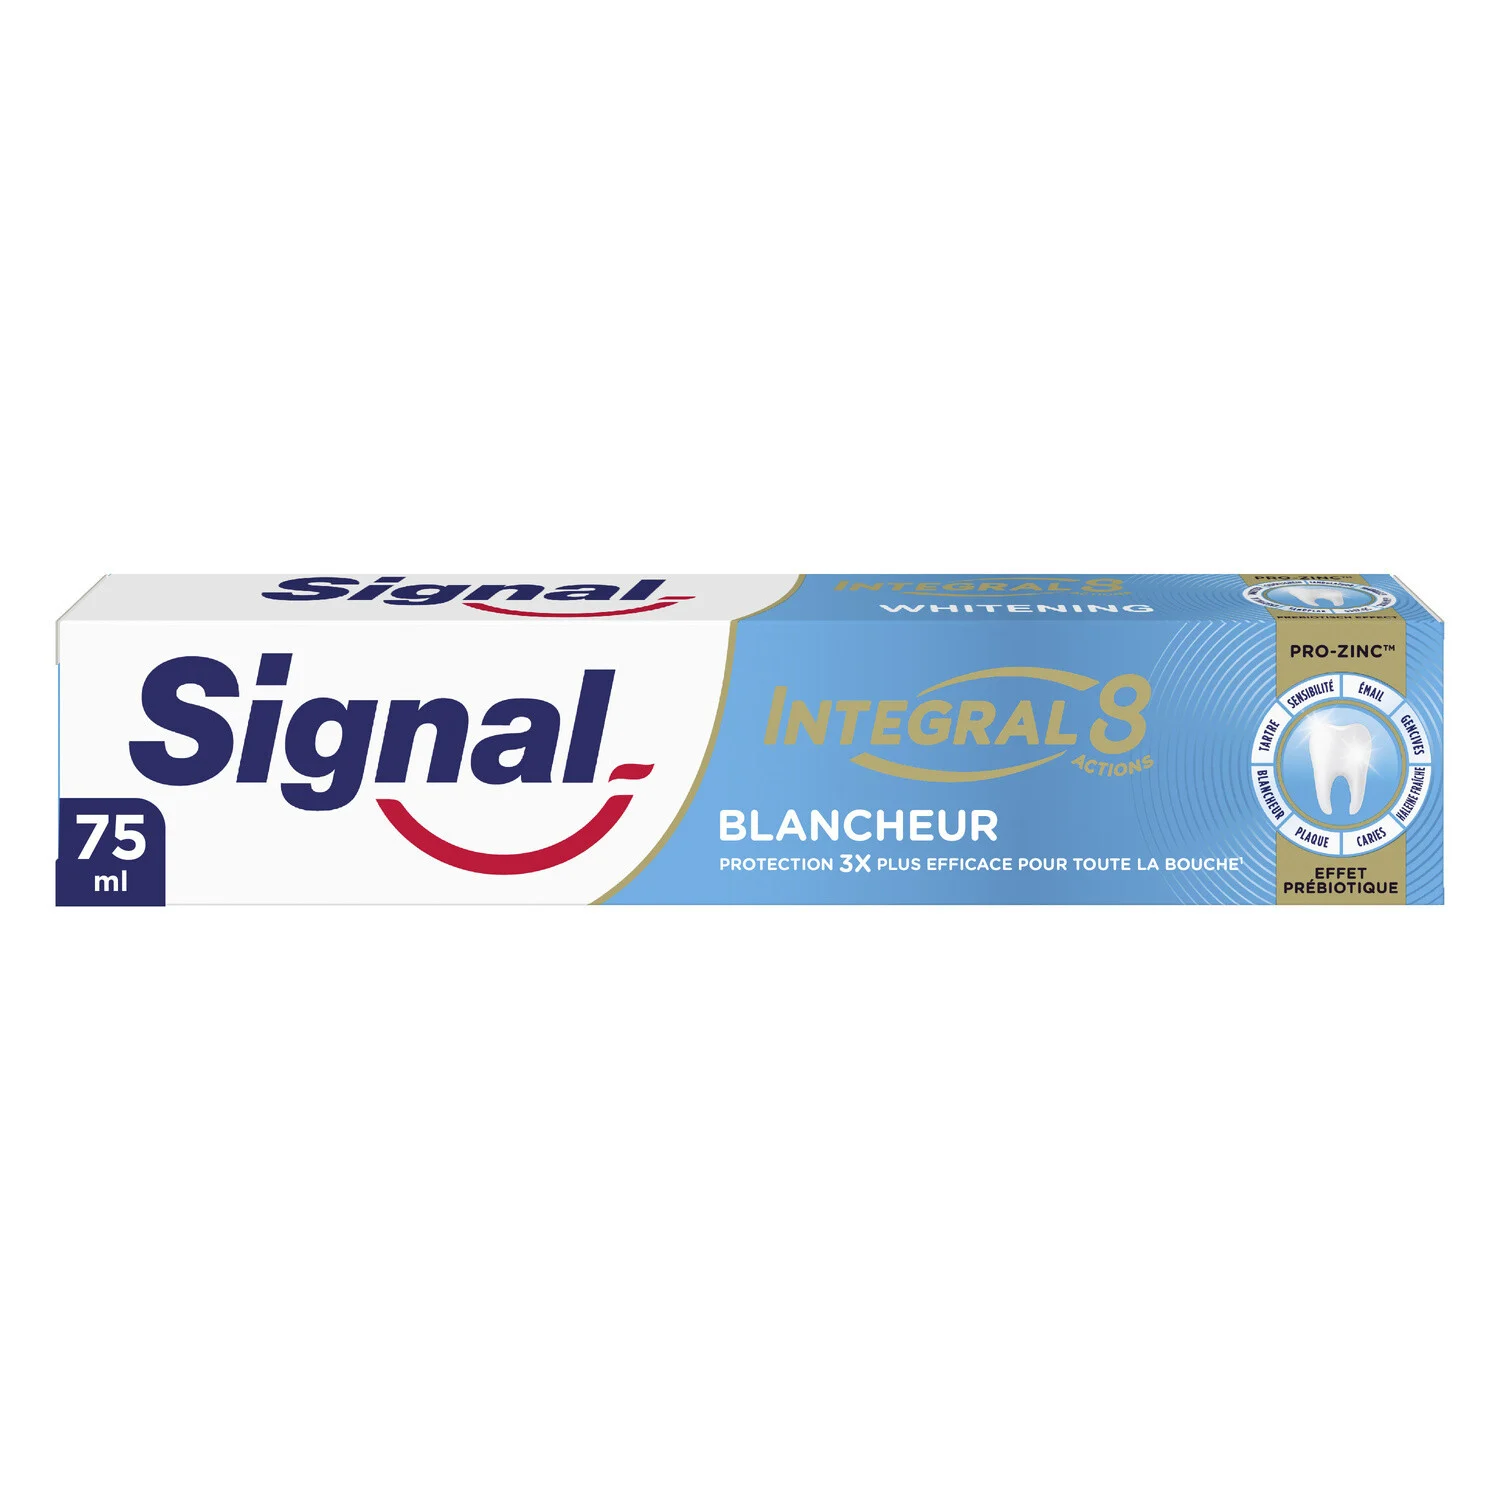 Dentifrice Integral 8 Blancheur Effet Prébiotique 75ml -signal